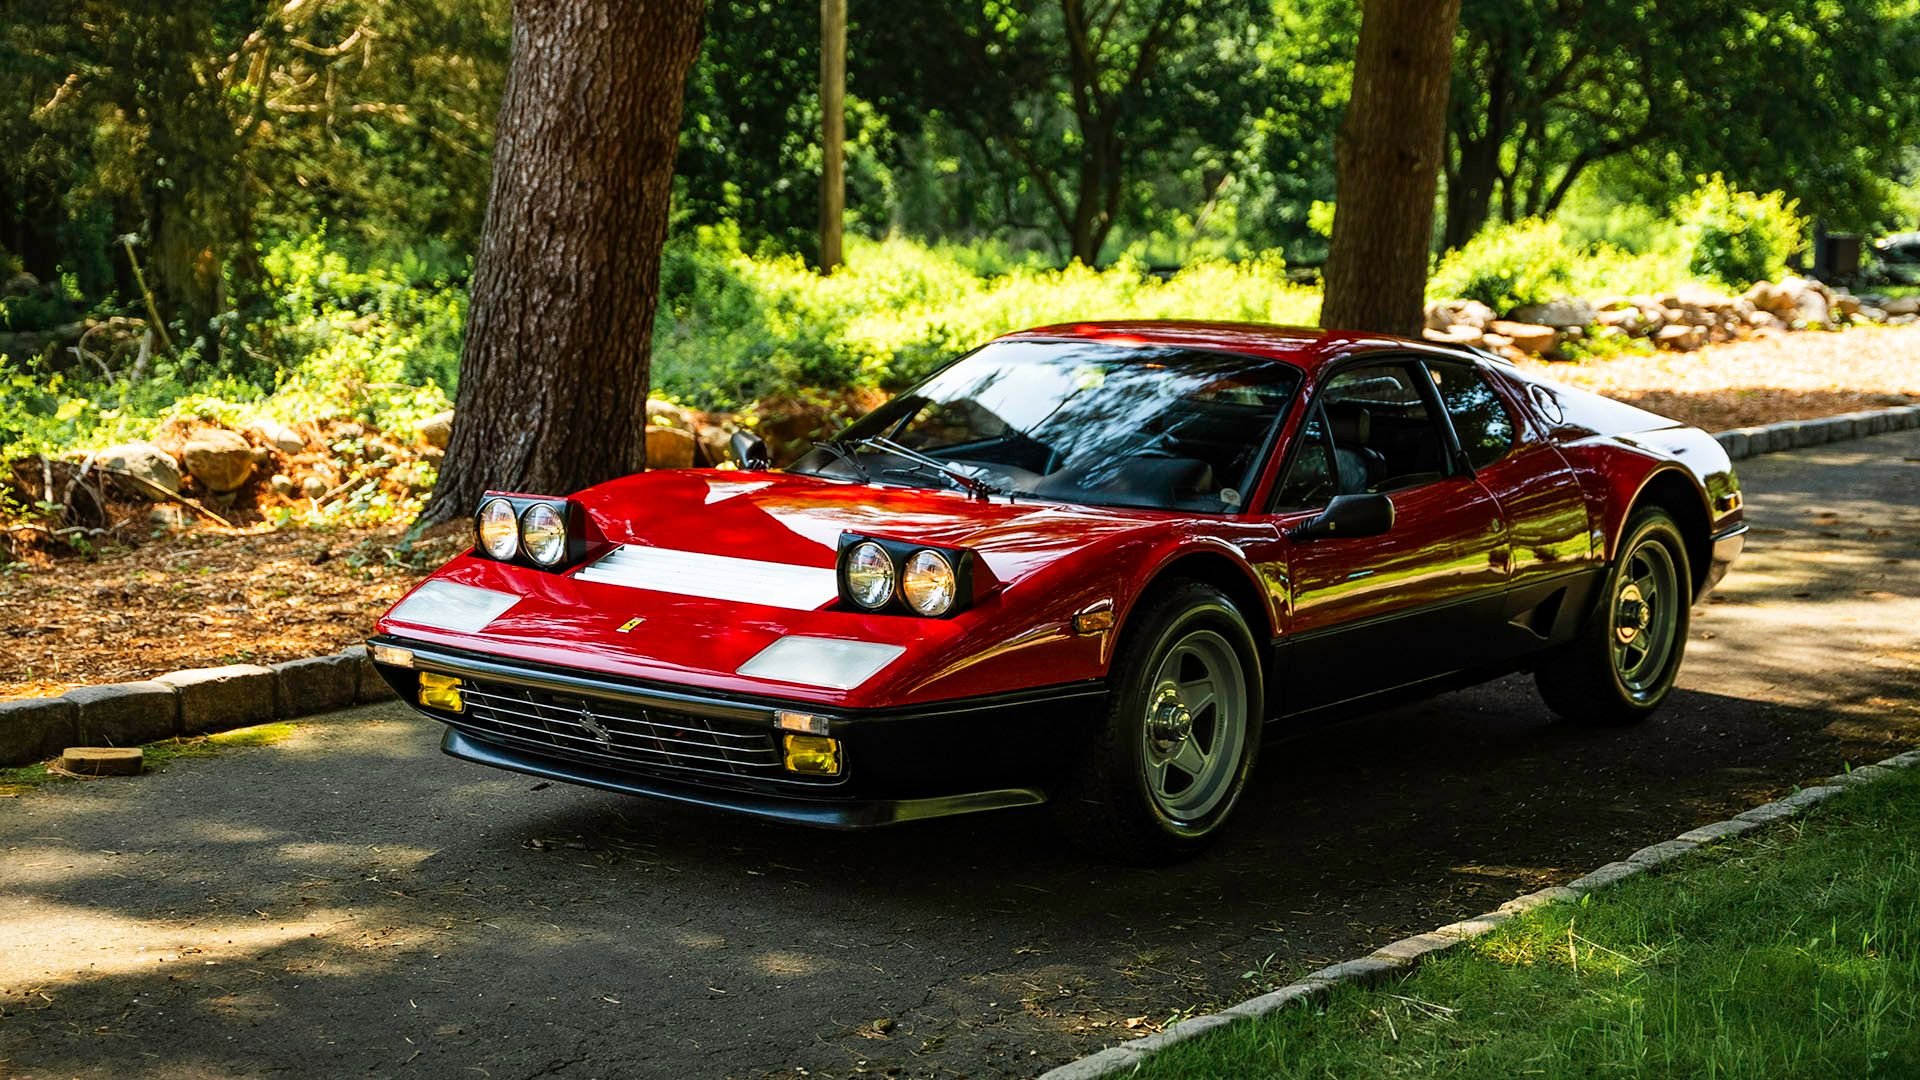 For Sale 1983 Ferrari 512 BBi